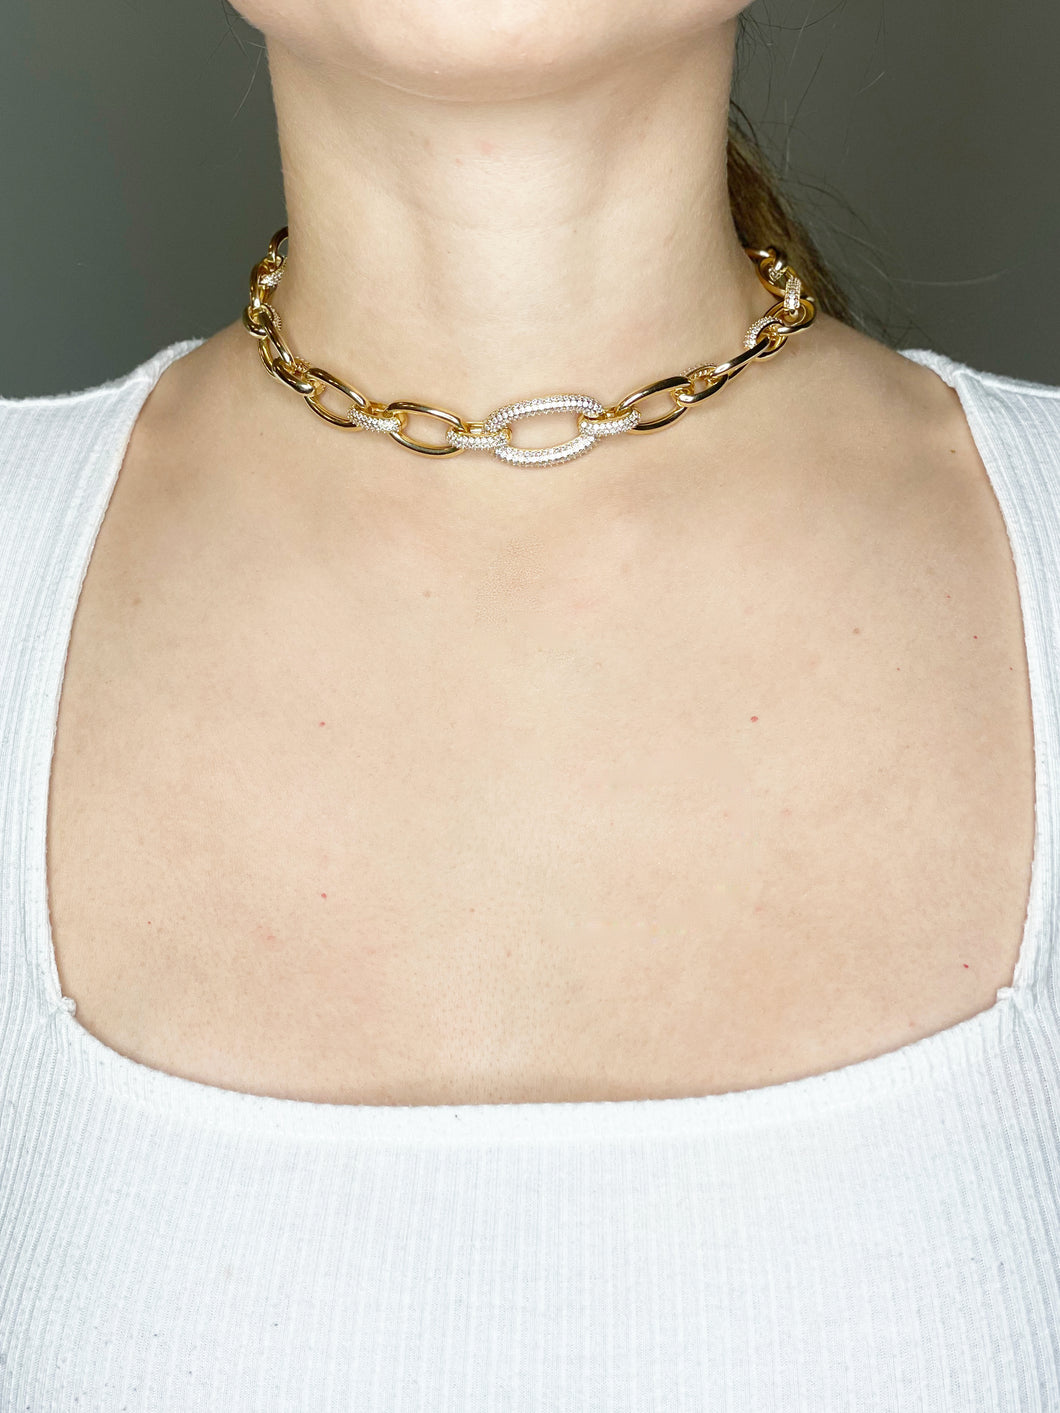 Super Chic Chain Necklace